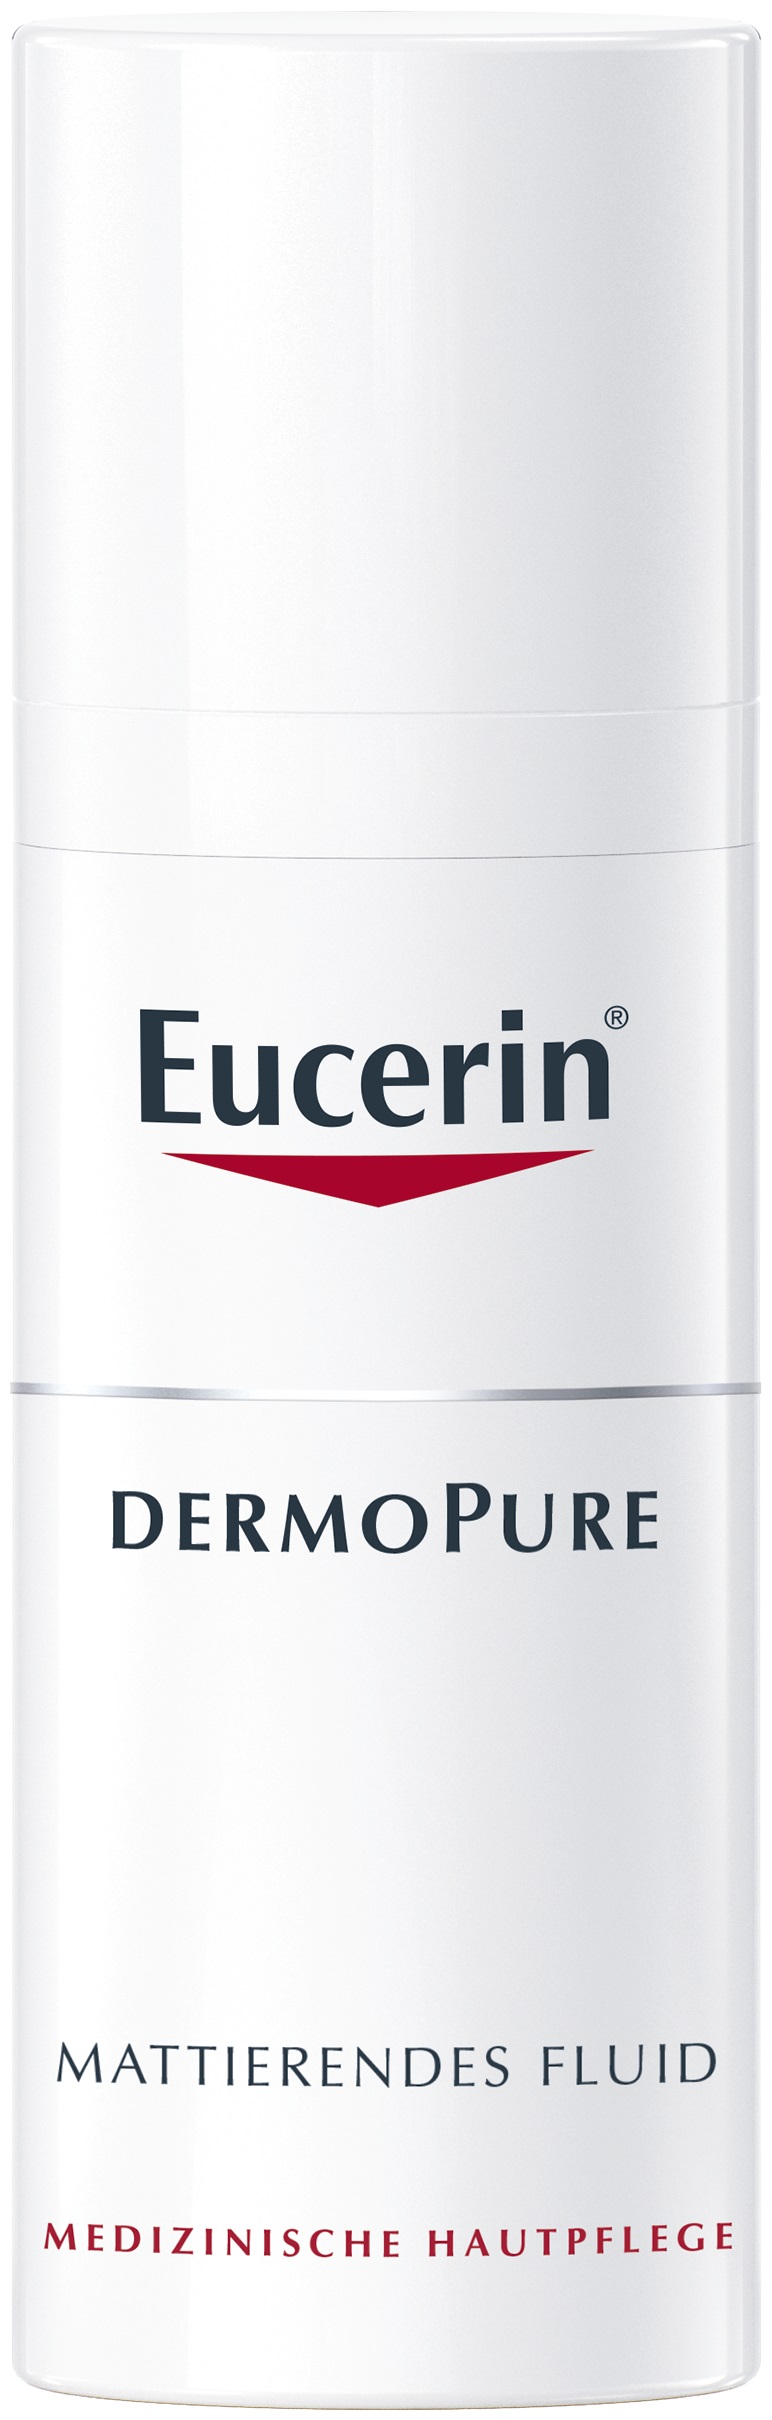 EUCERIN DermoPure mattító fluid 50 ml